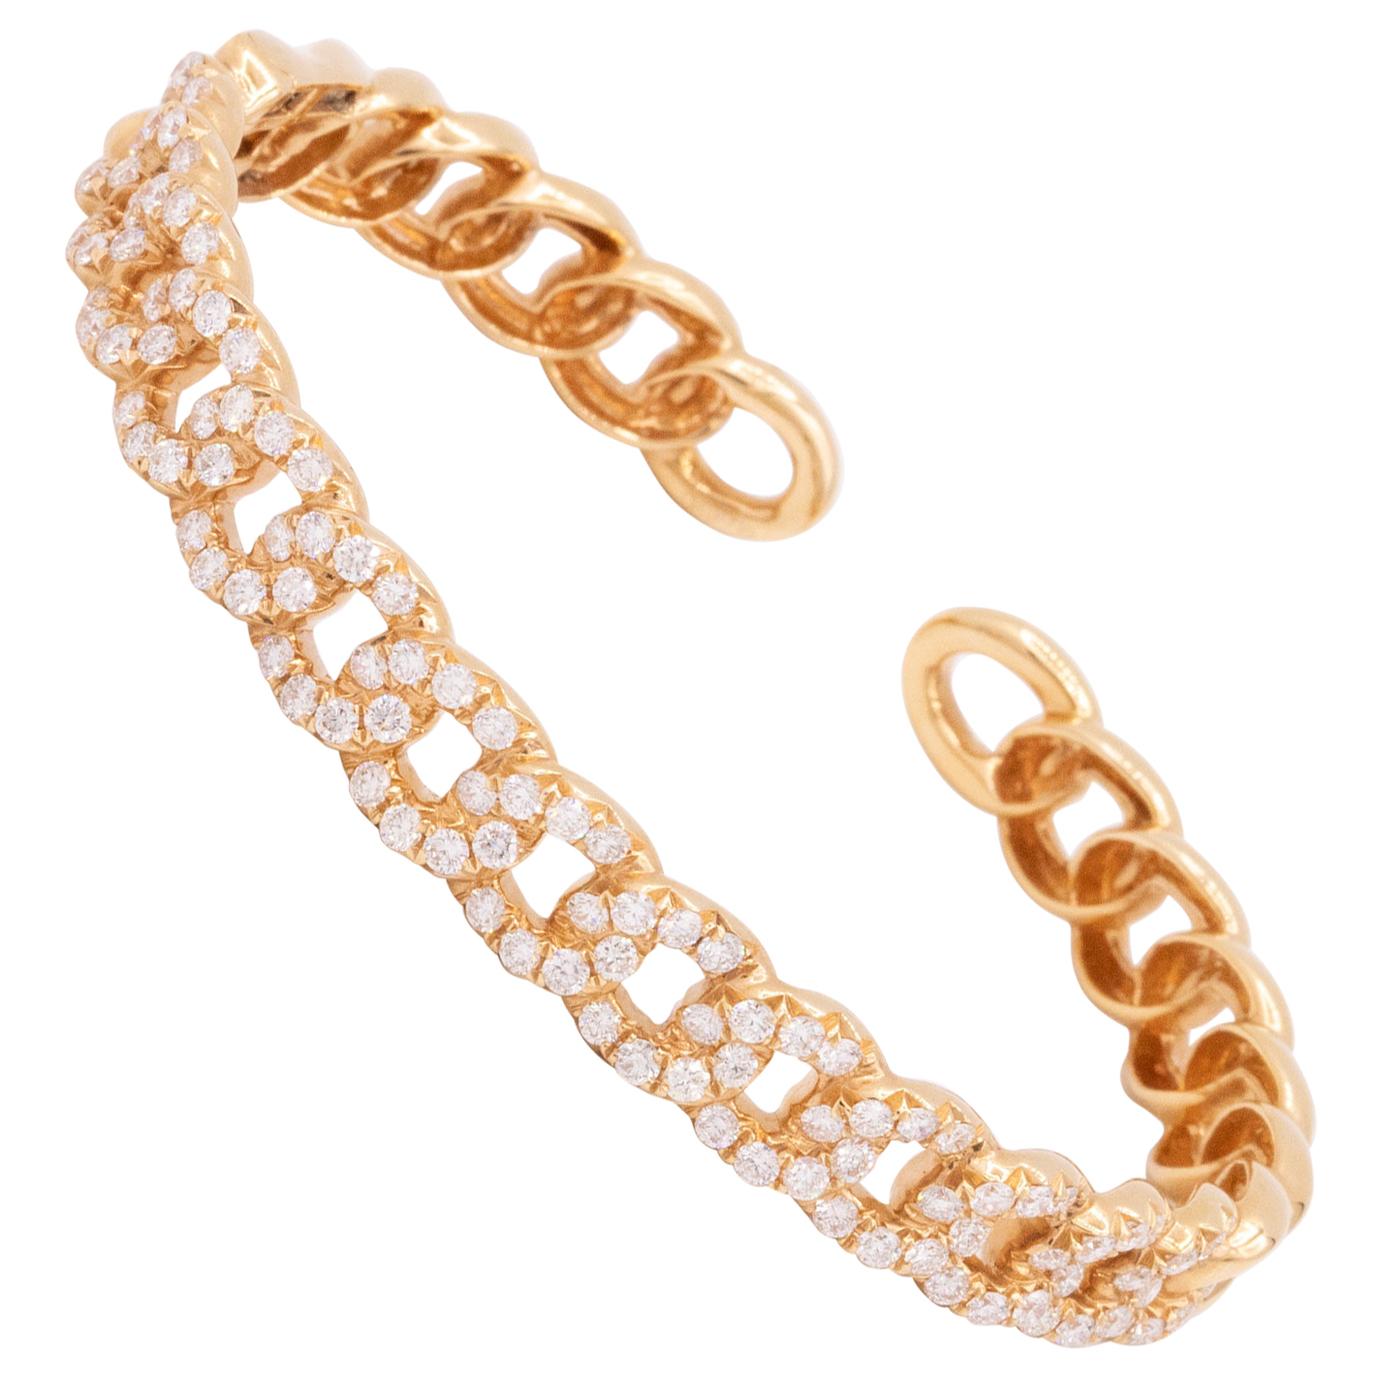 Chain Link Diamond Bangle Bracelet in 18 Karat Rose Gold-Original Retail $6995